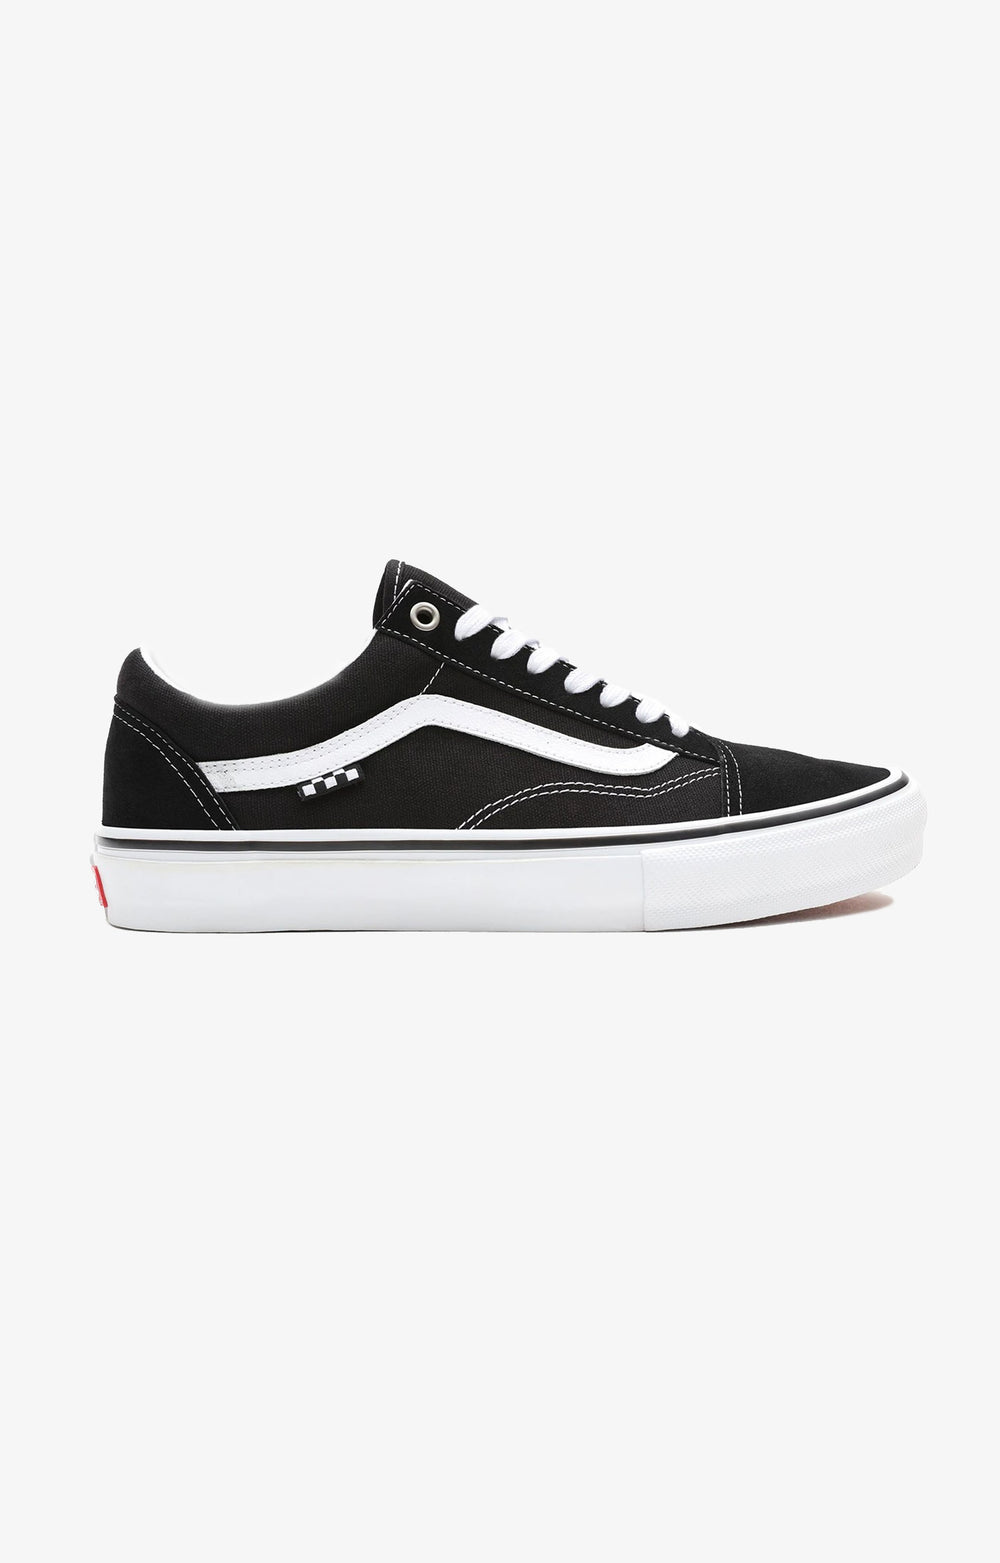 Vans Skate Old Skool Classic Pro Shoes, Black/White